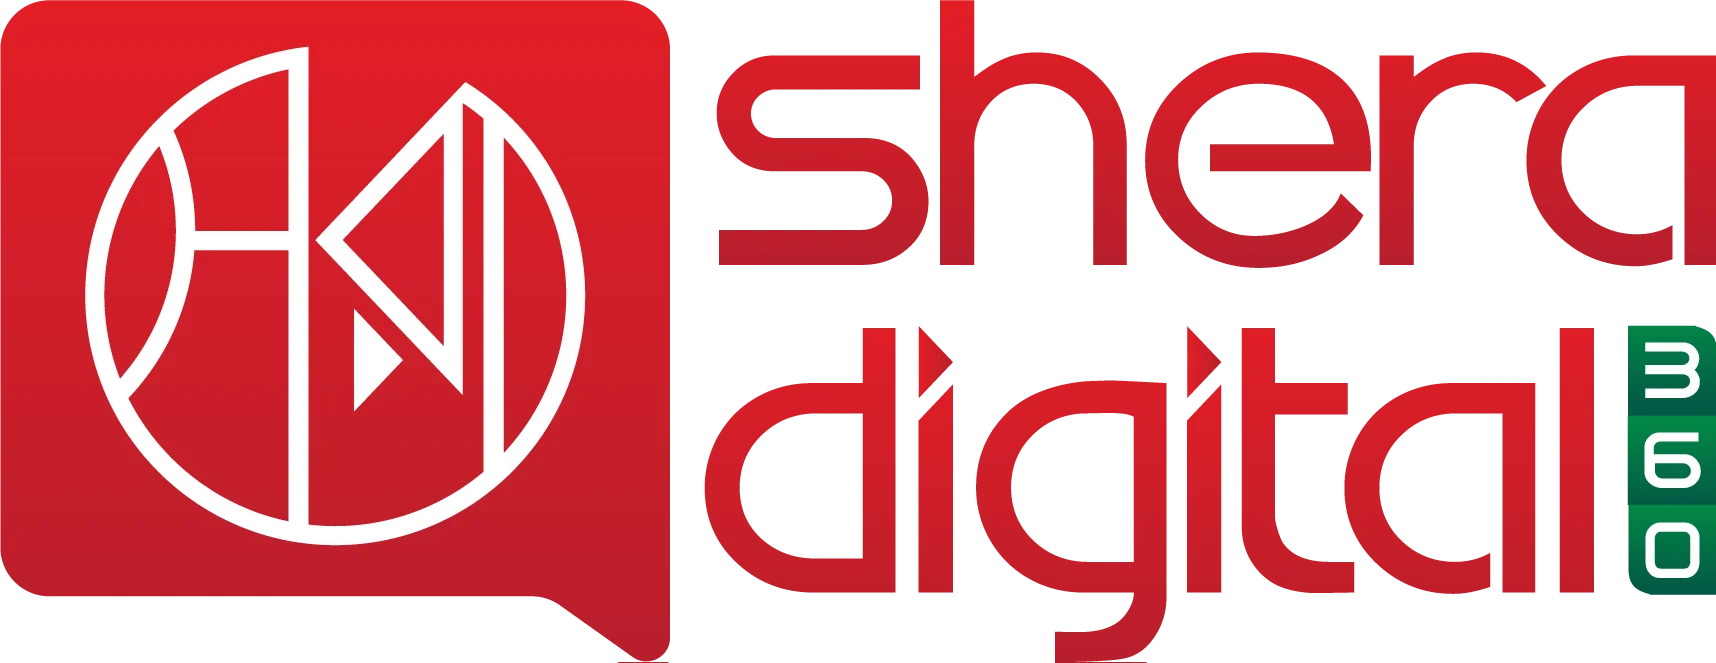 Shera Digital 360